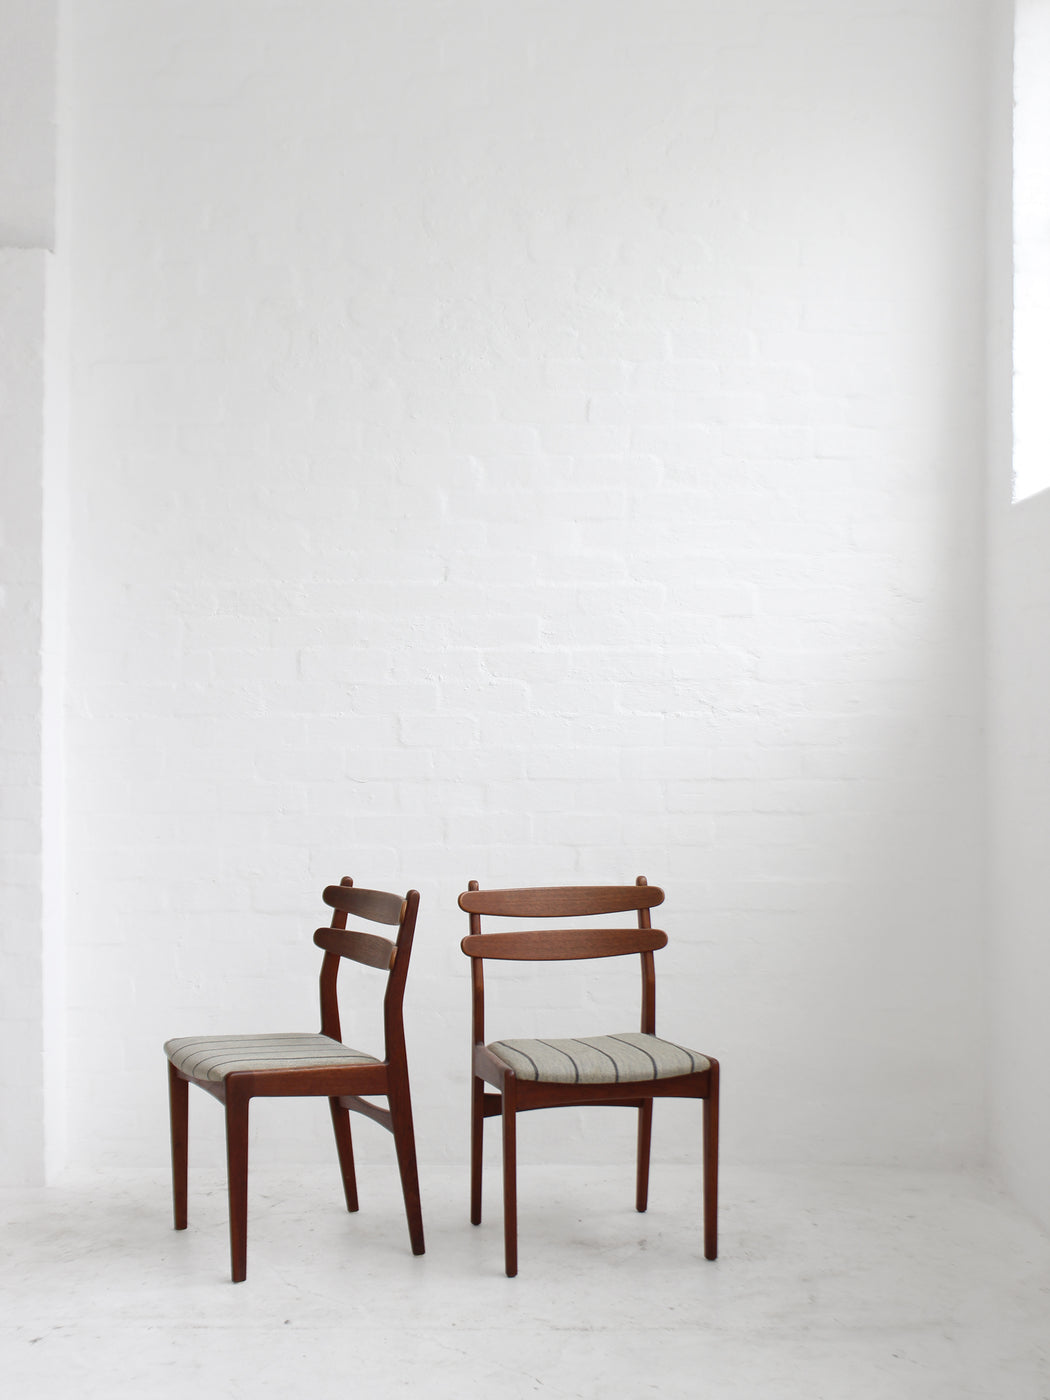 Kurt Olsen 'Ladderback' Chairs